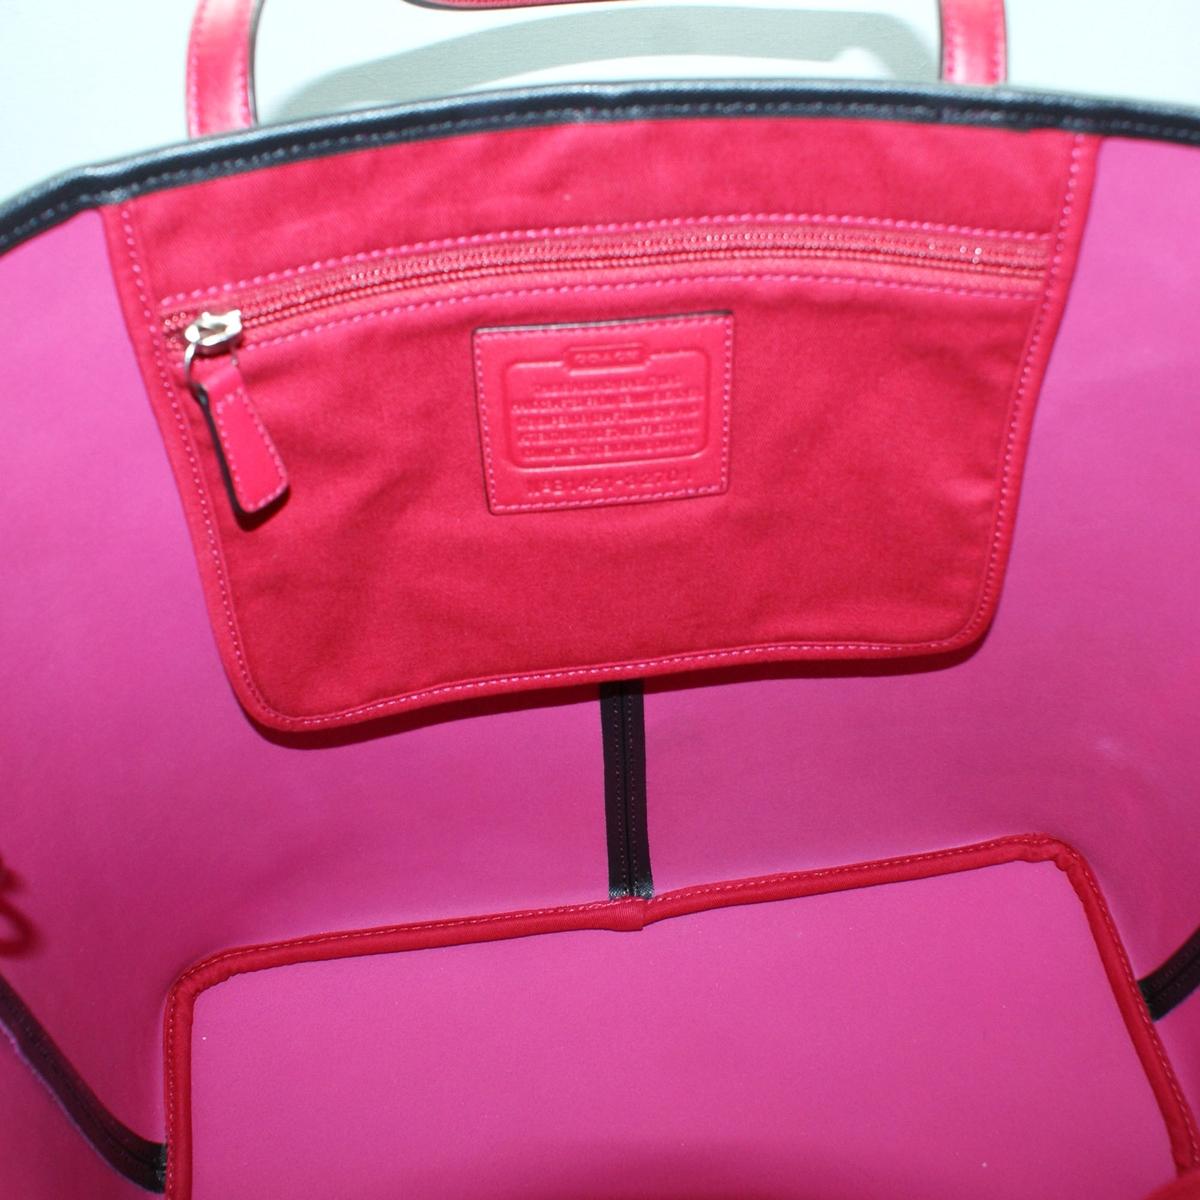 Coach Black Leather Large Tote Bag #32701 | Coach 32701